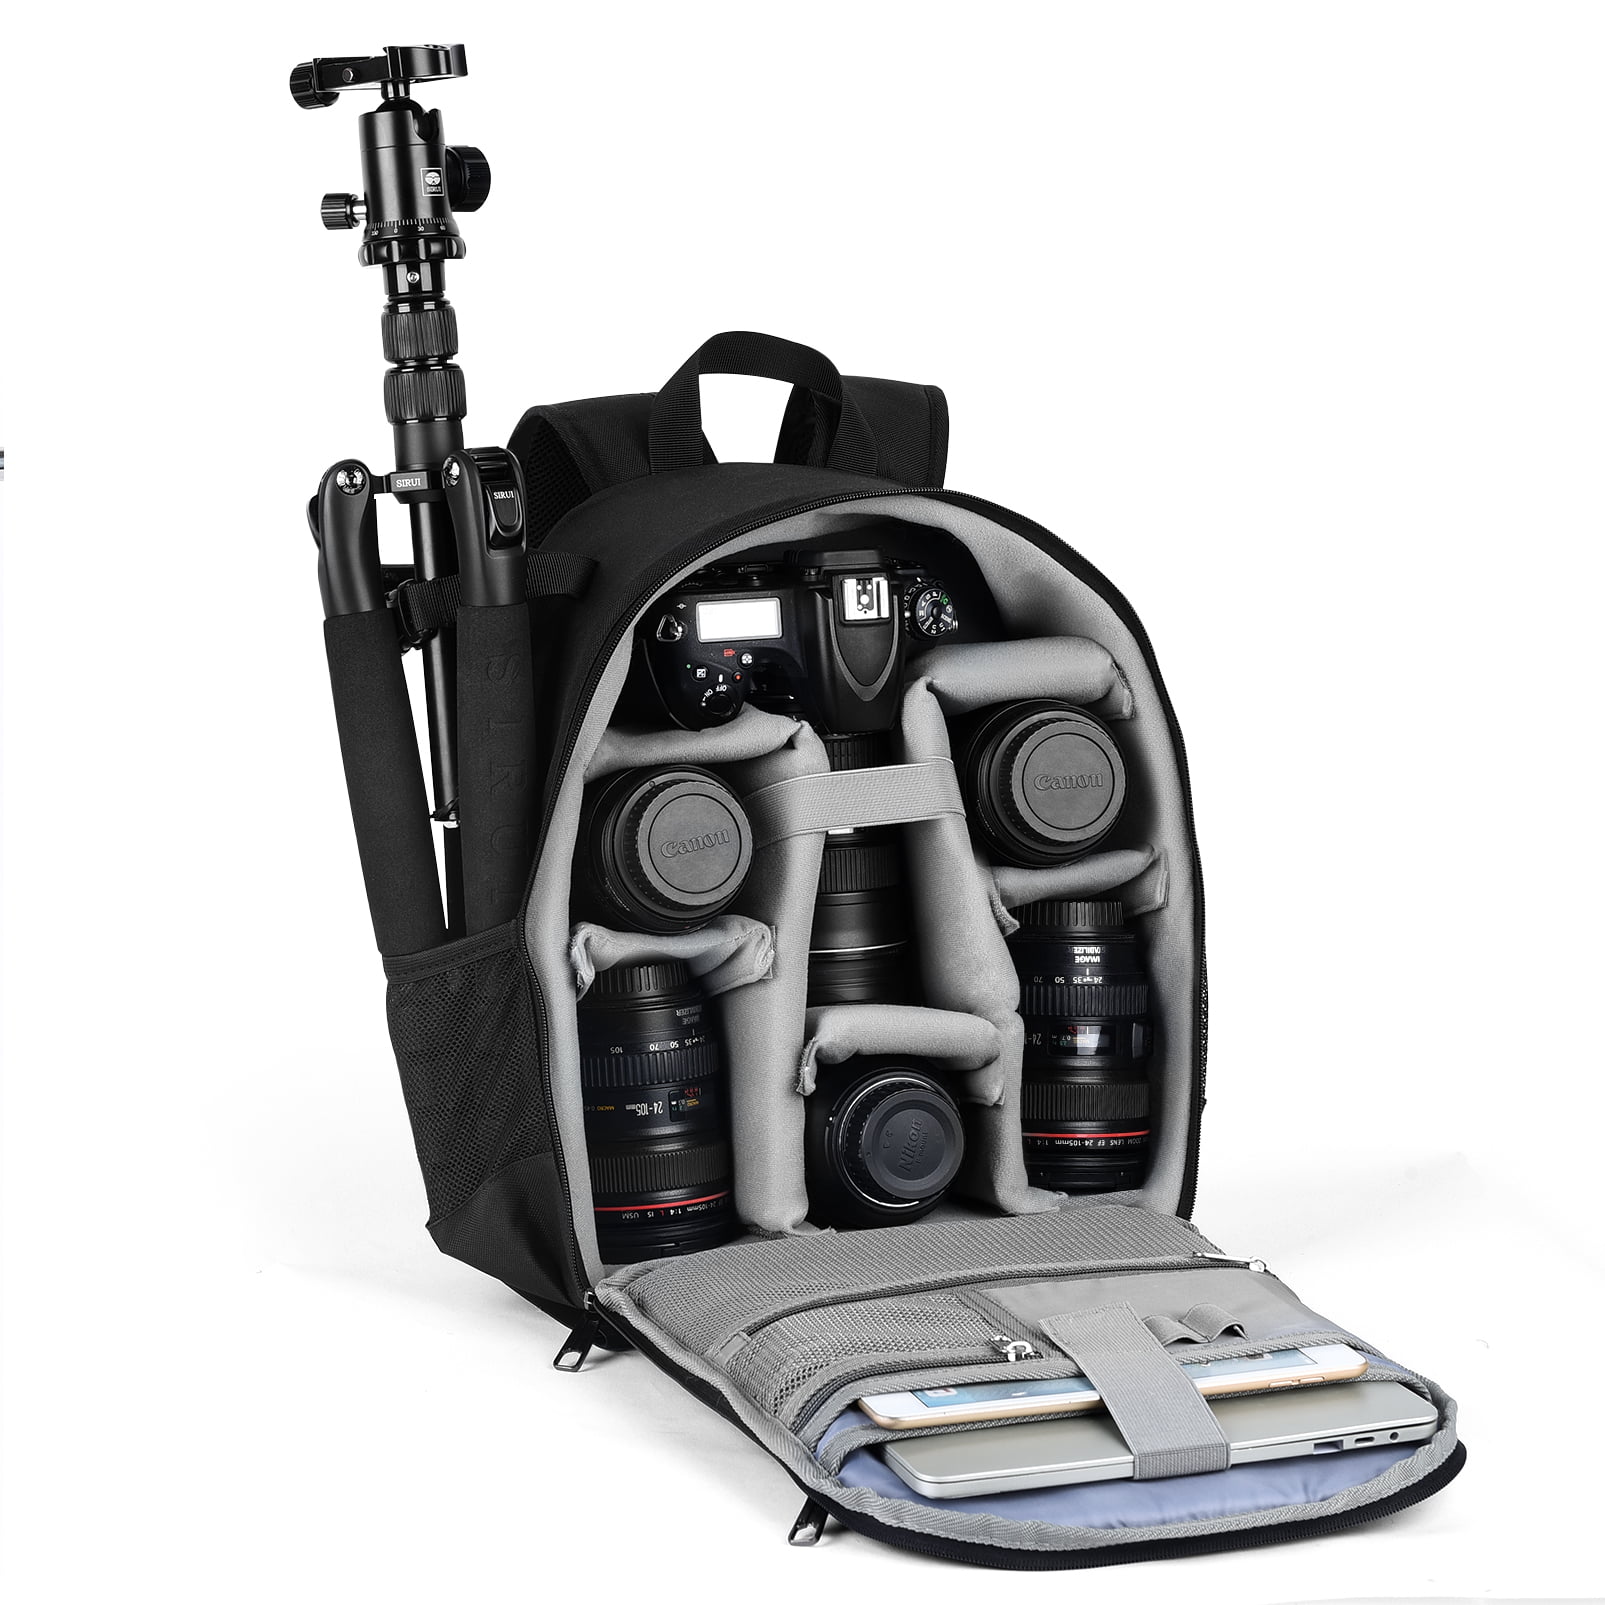 The Camera Large Capacity Multi-Functional Storage Bag